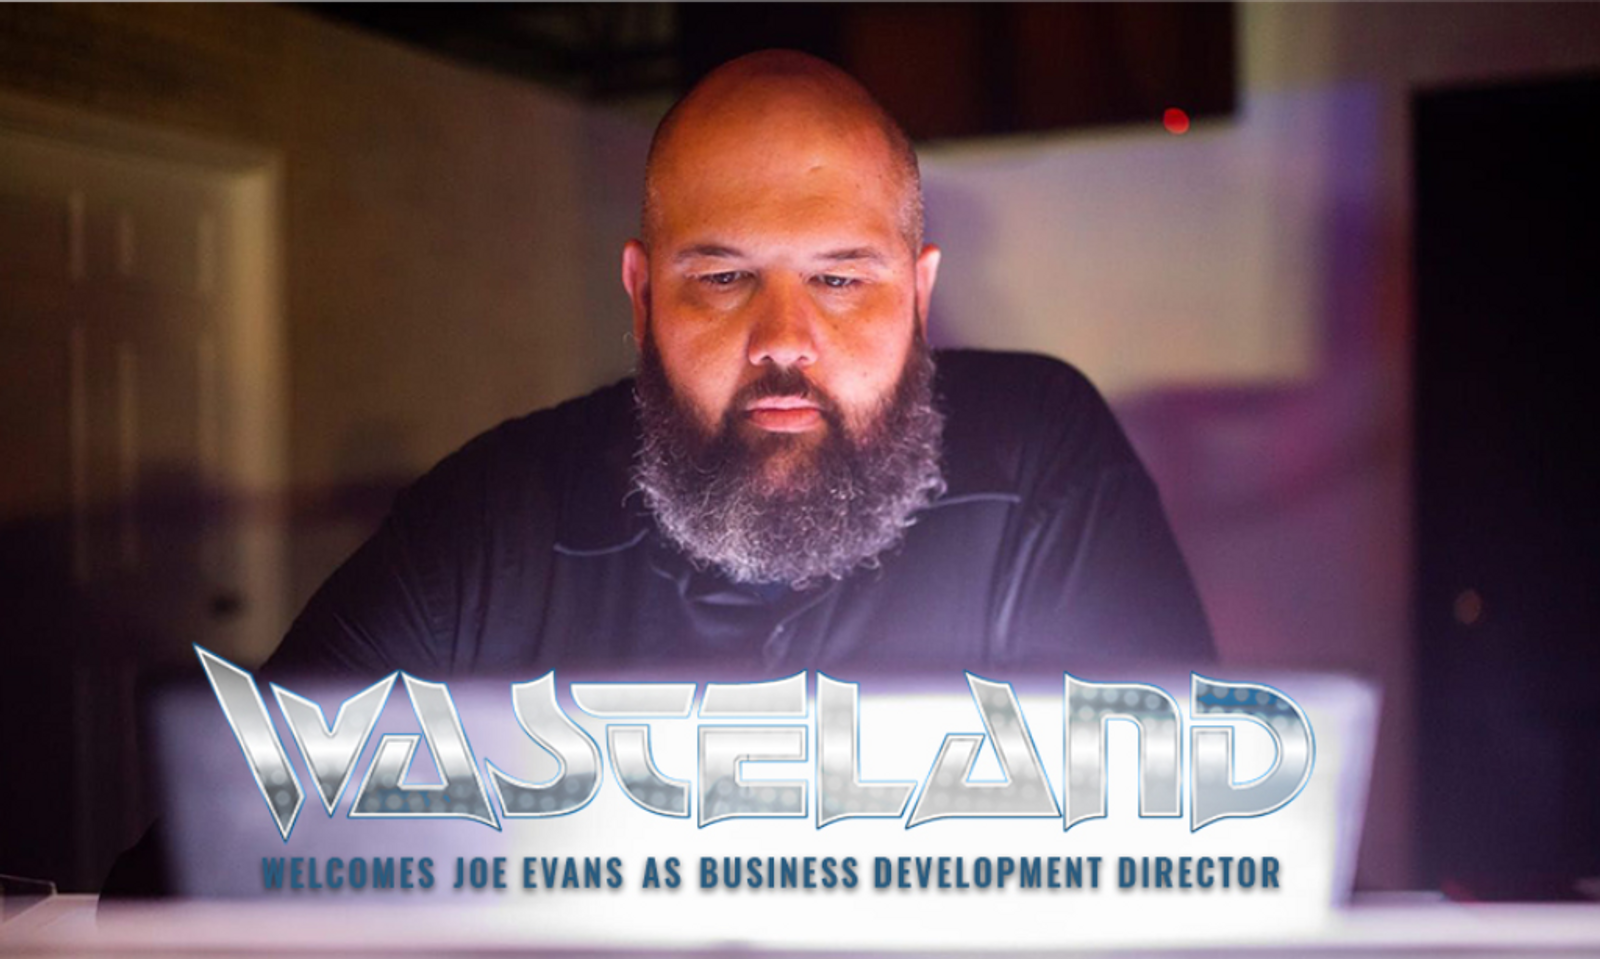 Wasteland Announces Joe Evans as Business Development Director